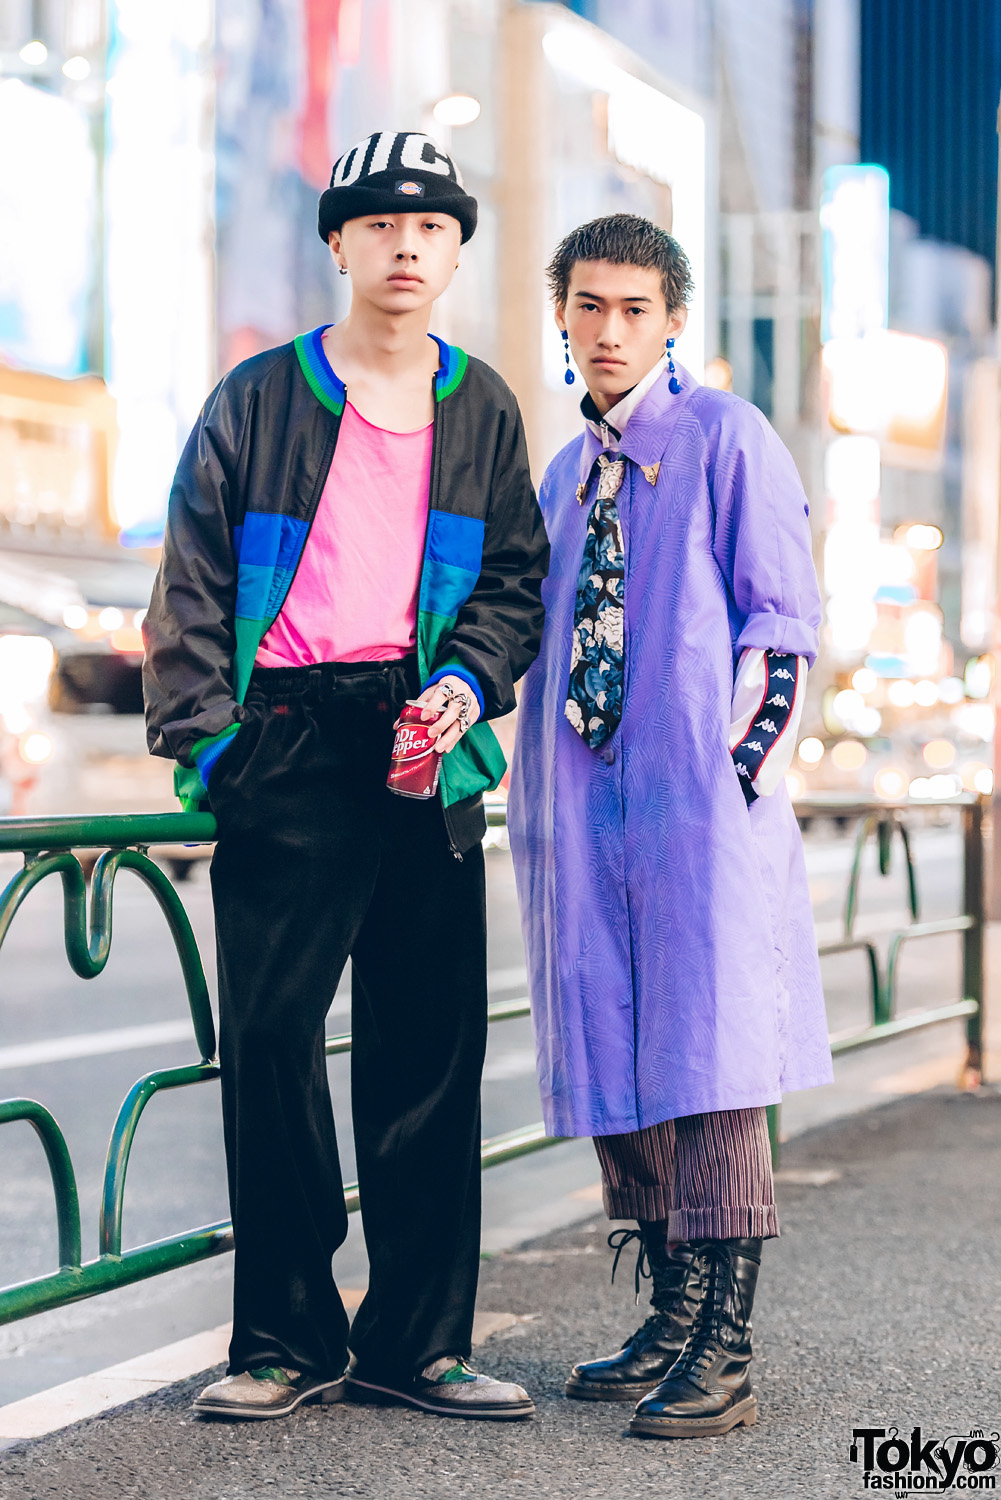 handmade clothes | Tokyo Fashion News